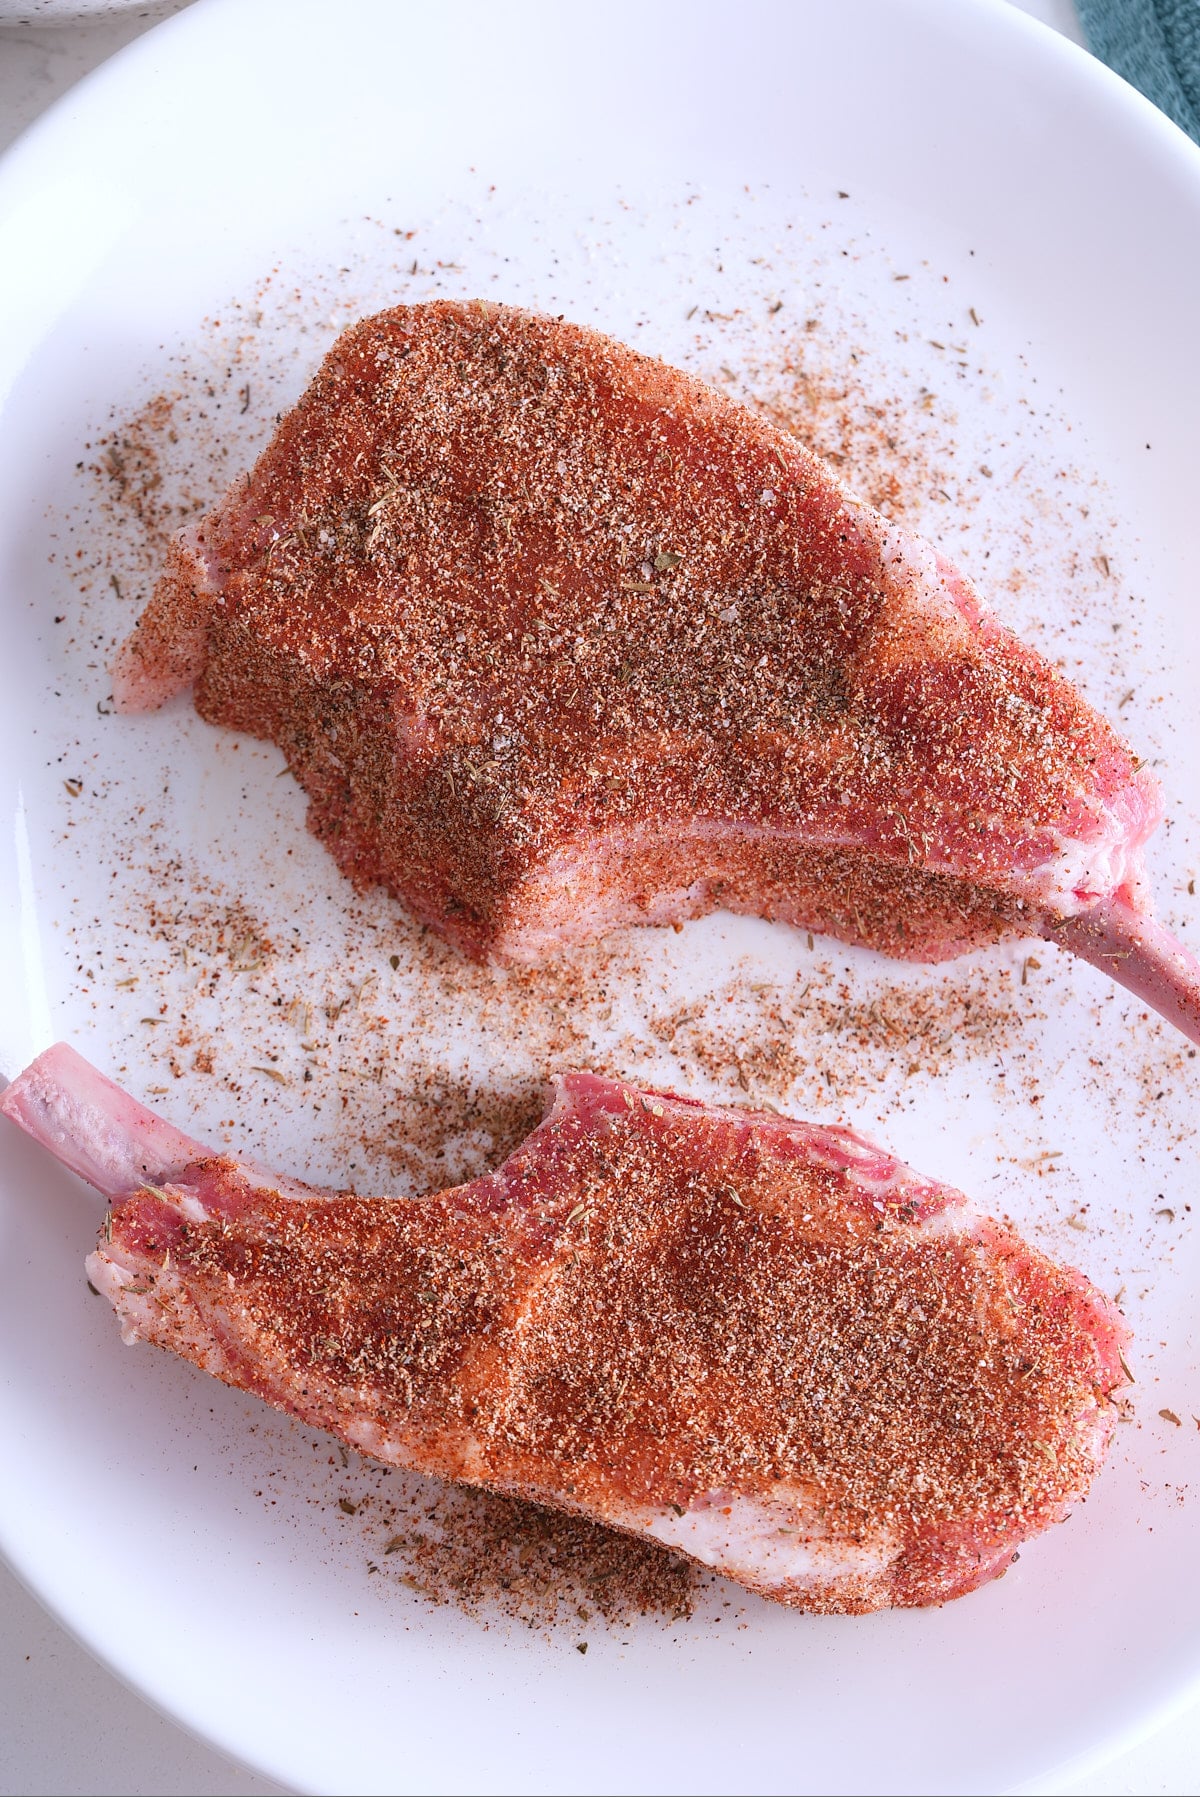 2 pork chops covered in homemade pork chop seasoning.